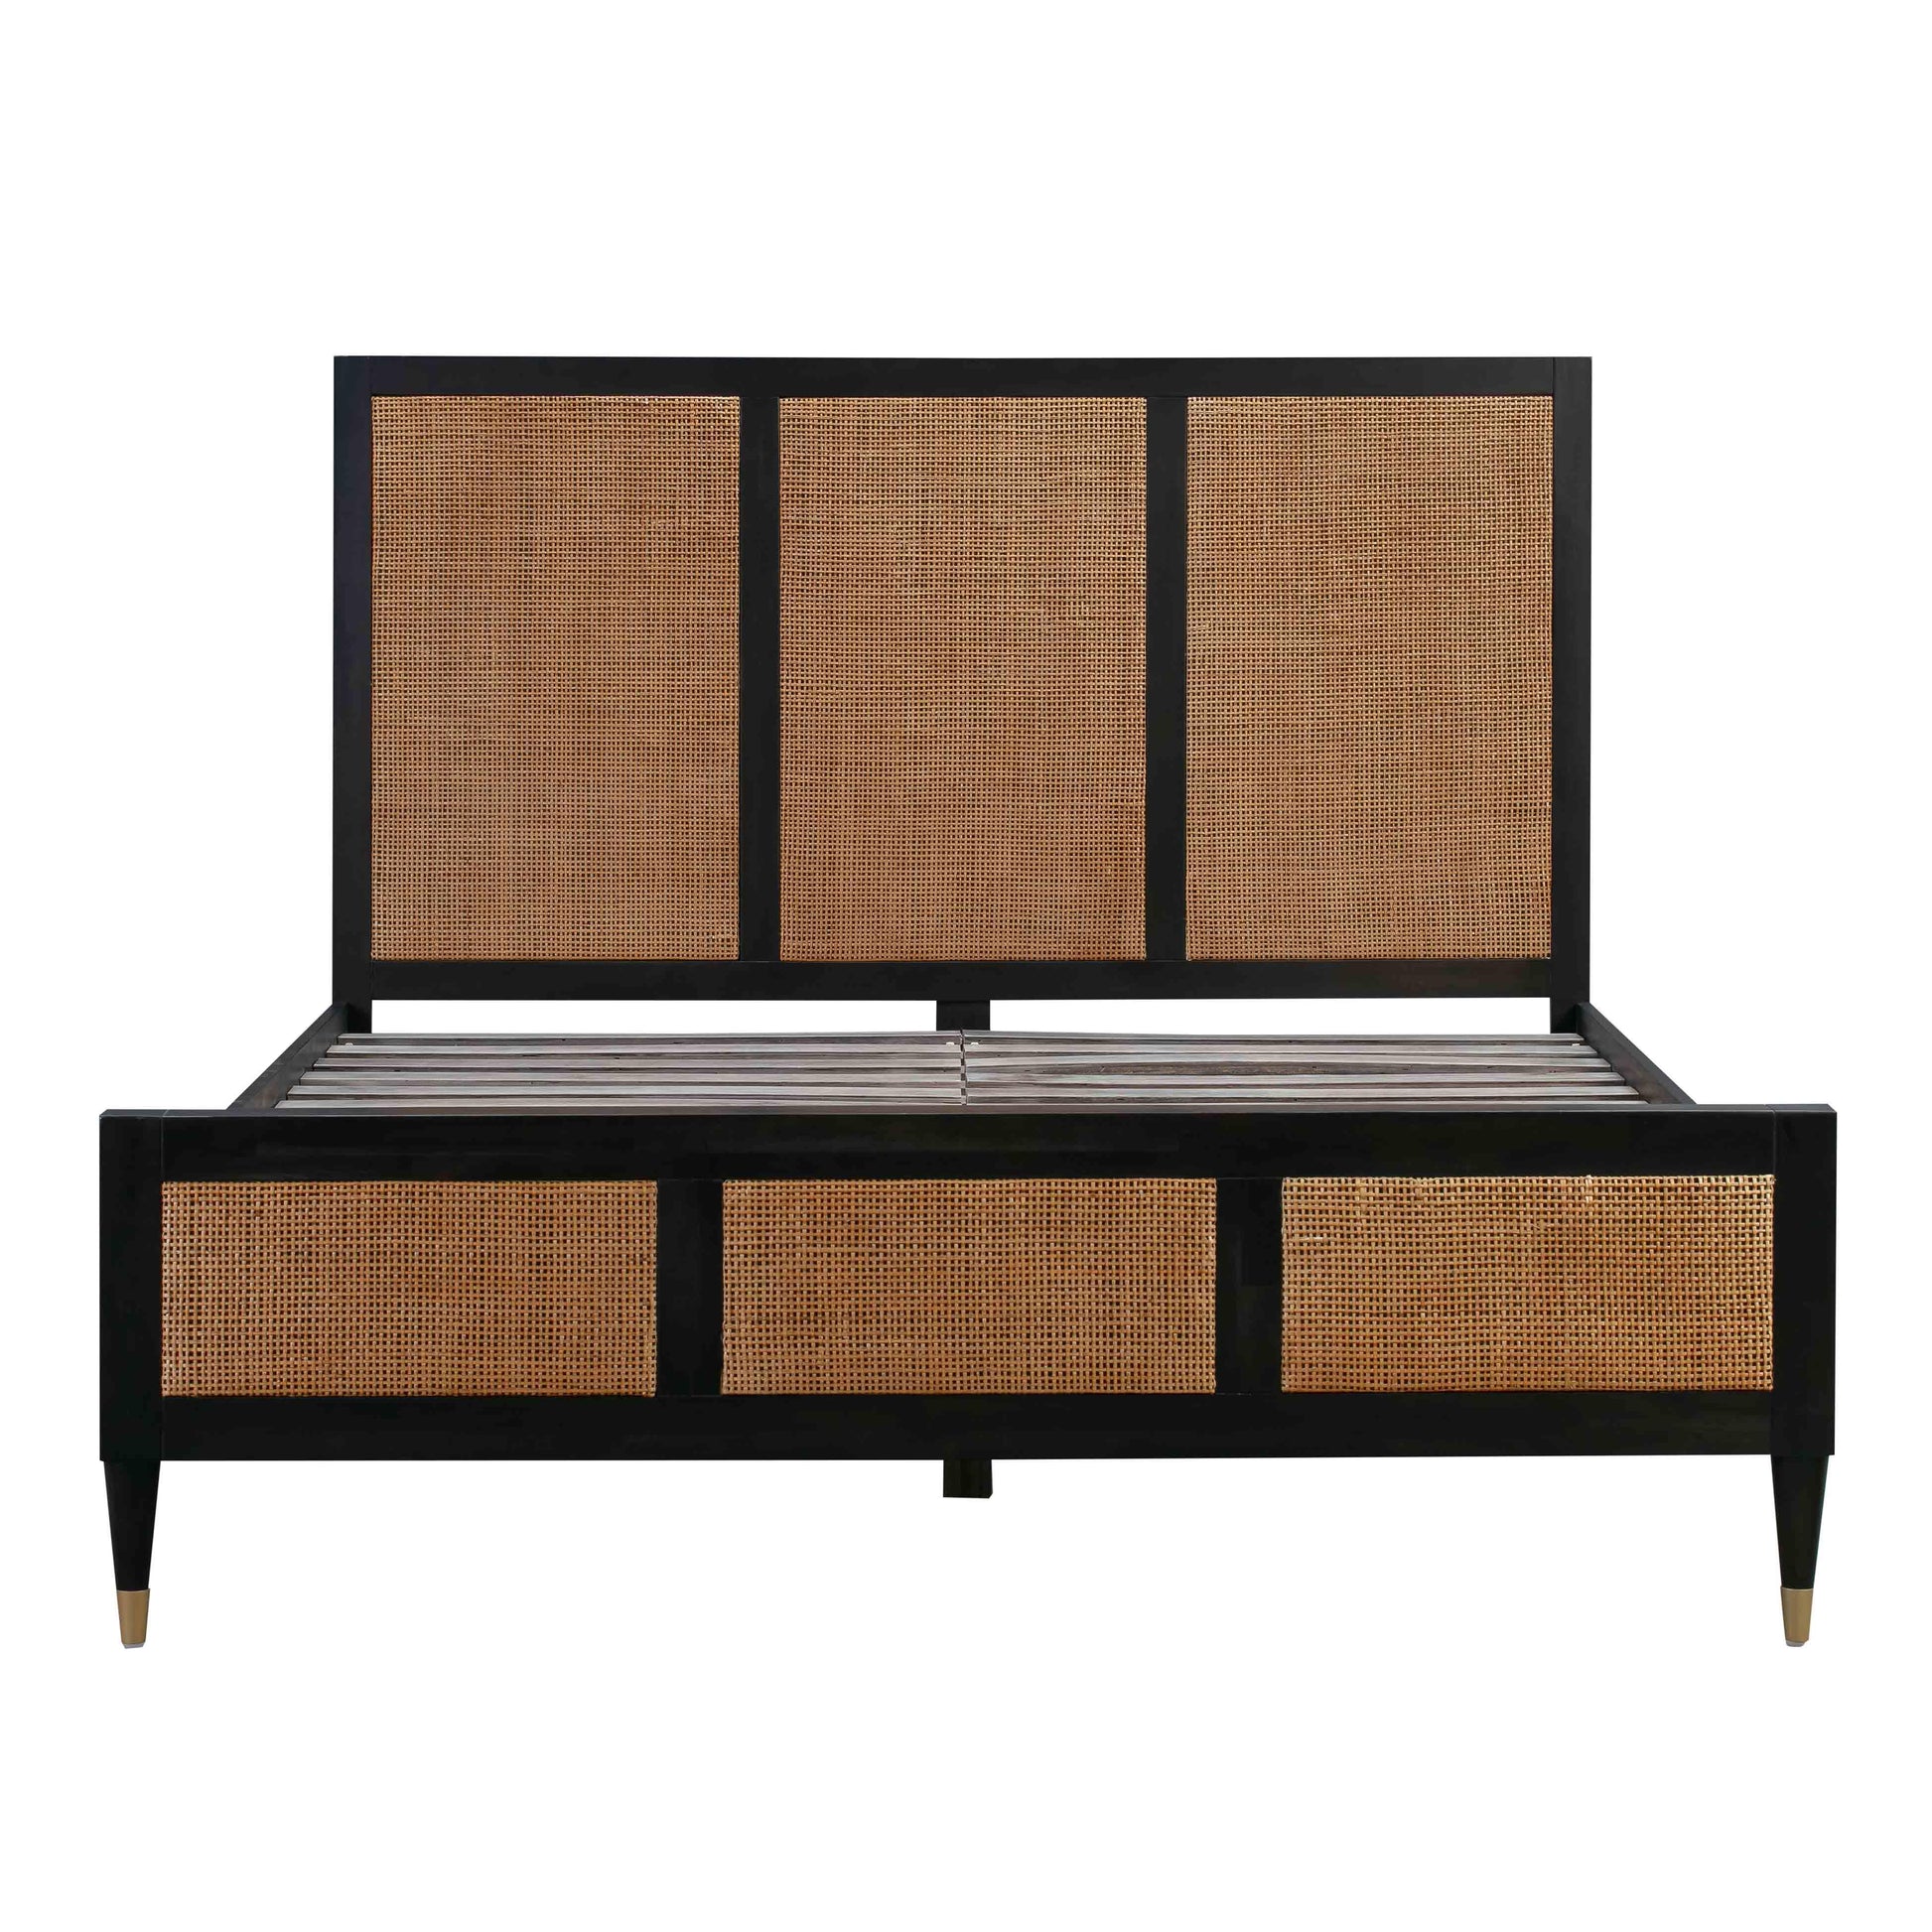 Tov Furniture Sierra Noir Queen Bed